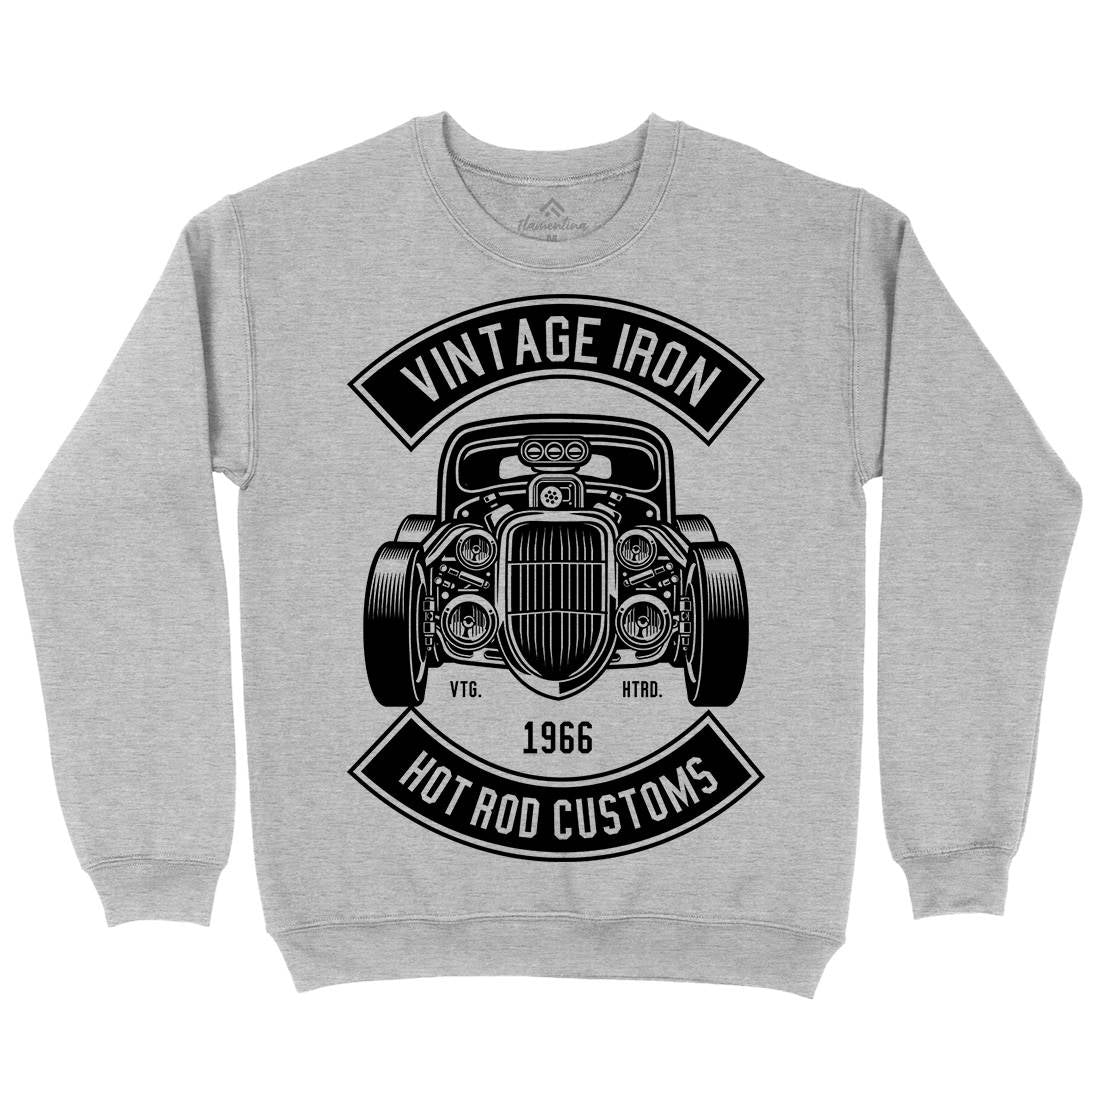 Vintage Iron Kids Crew Neck Sweatshirt Cars B666